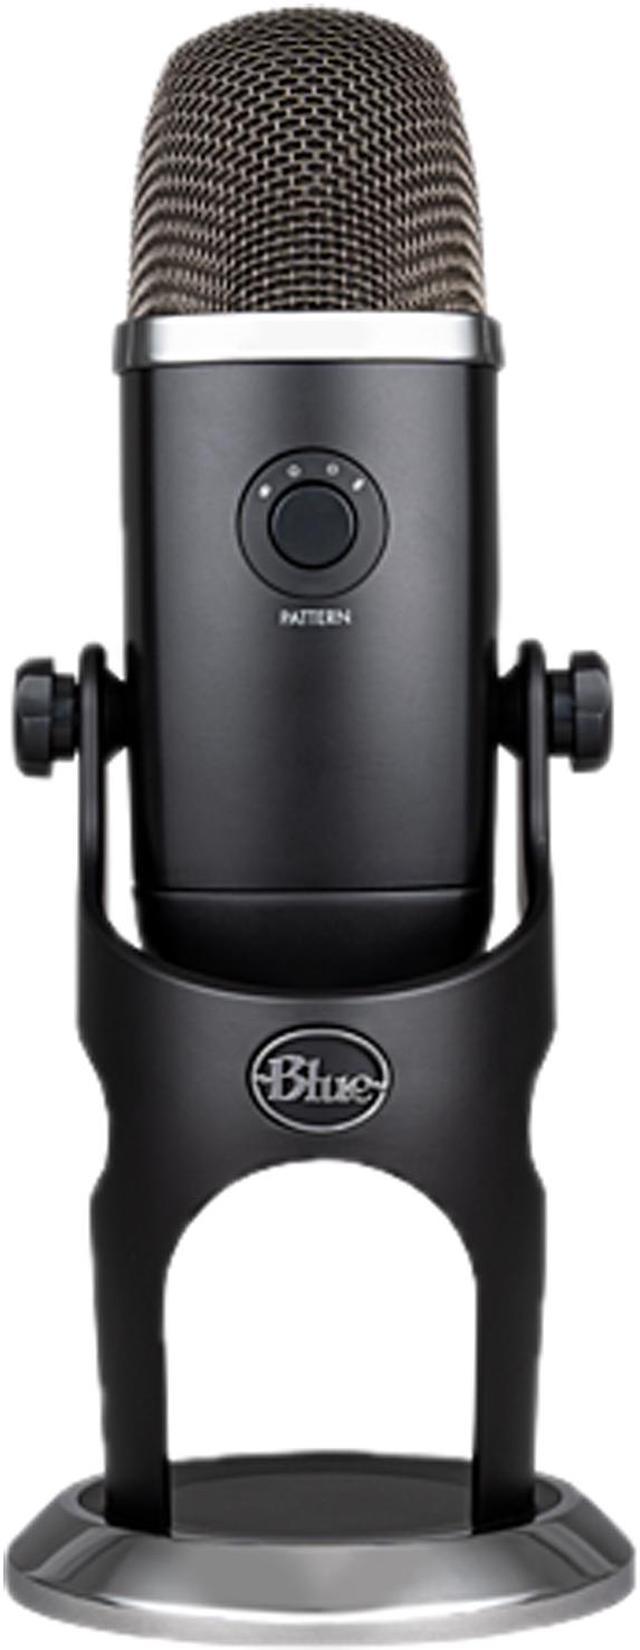 Blue Yeti X Streaming Microphone - Black Out - Newegg.com